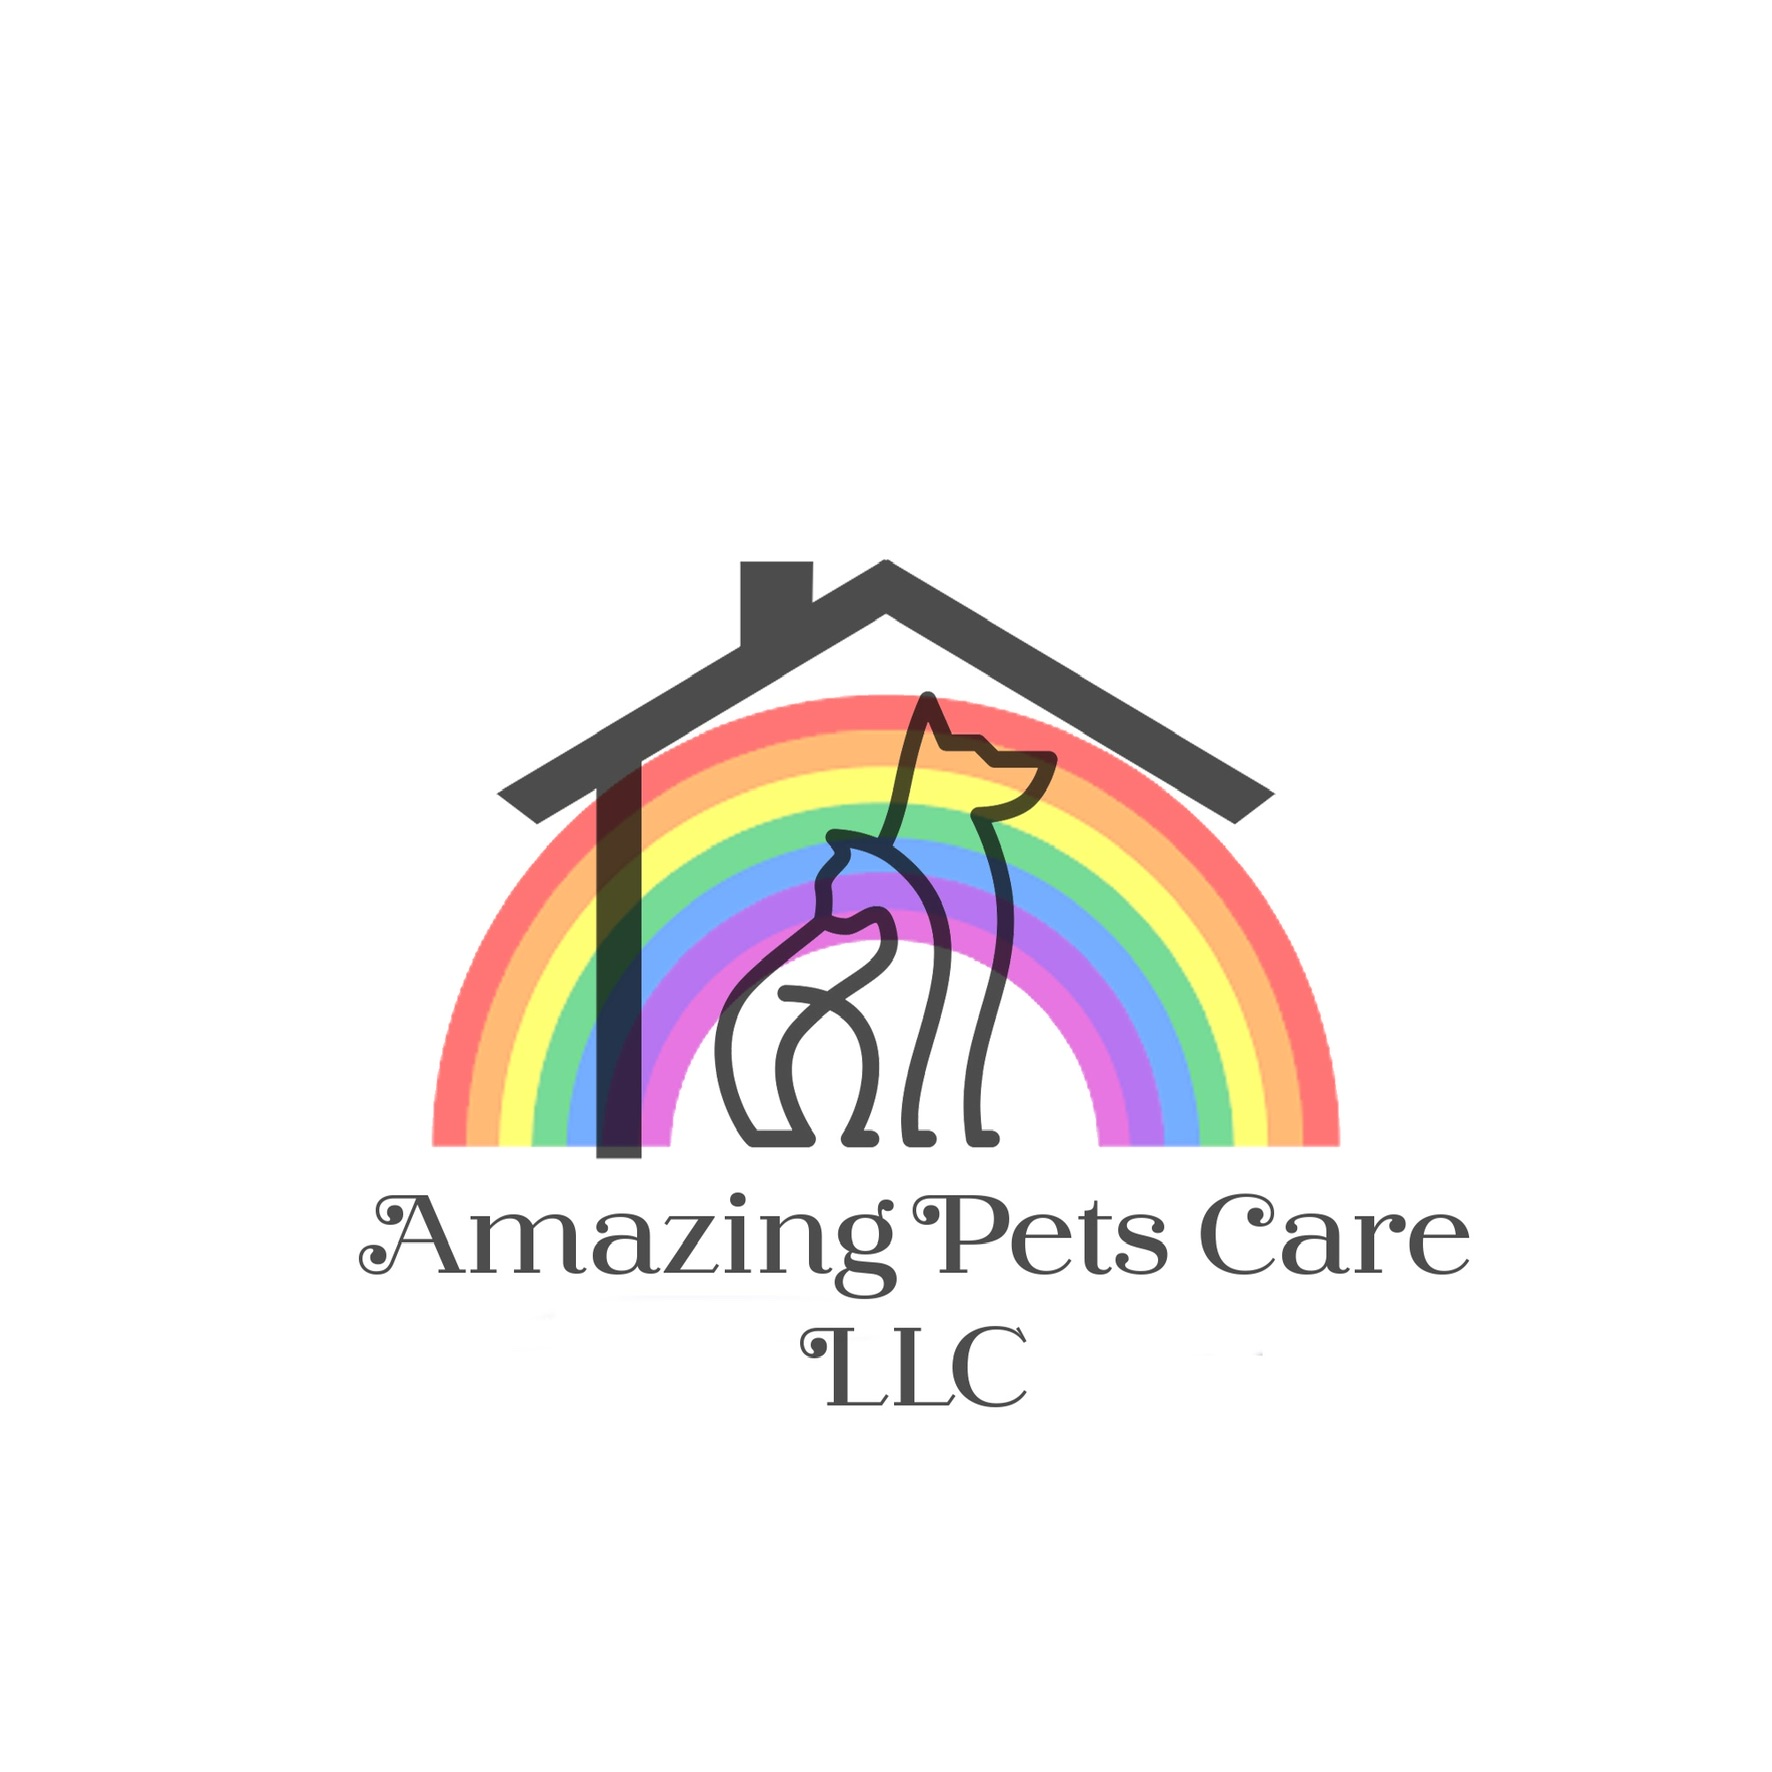 Amazing Pets Care, LLC